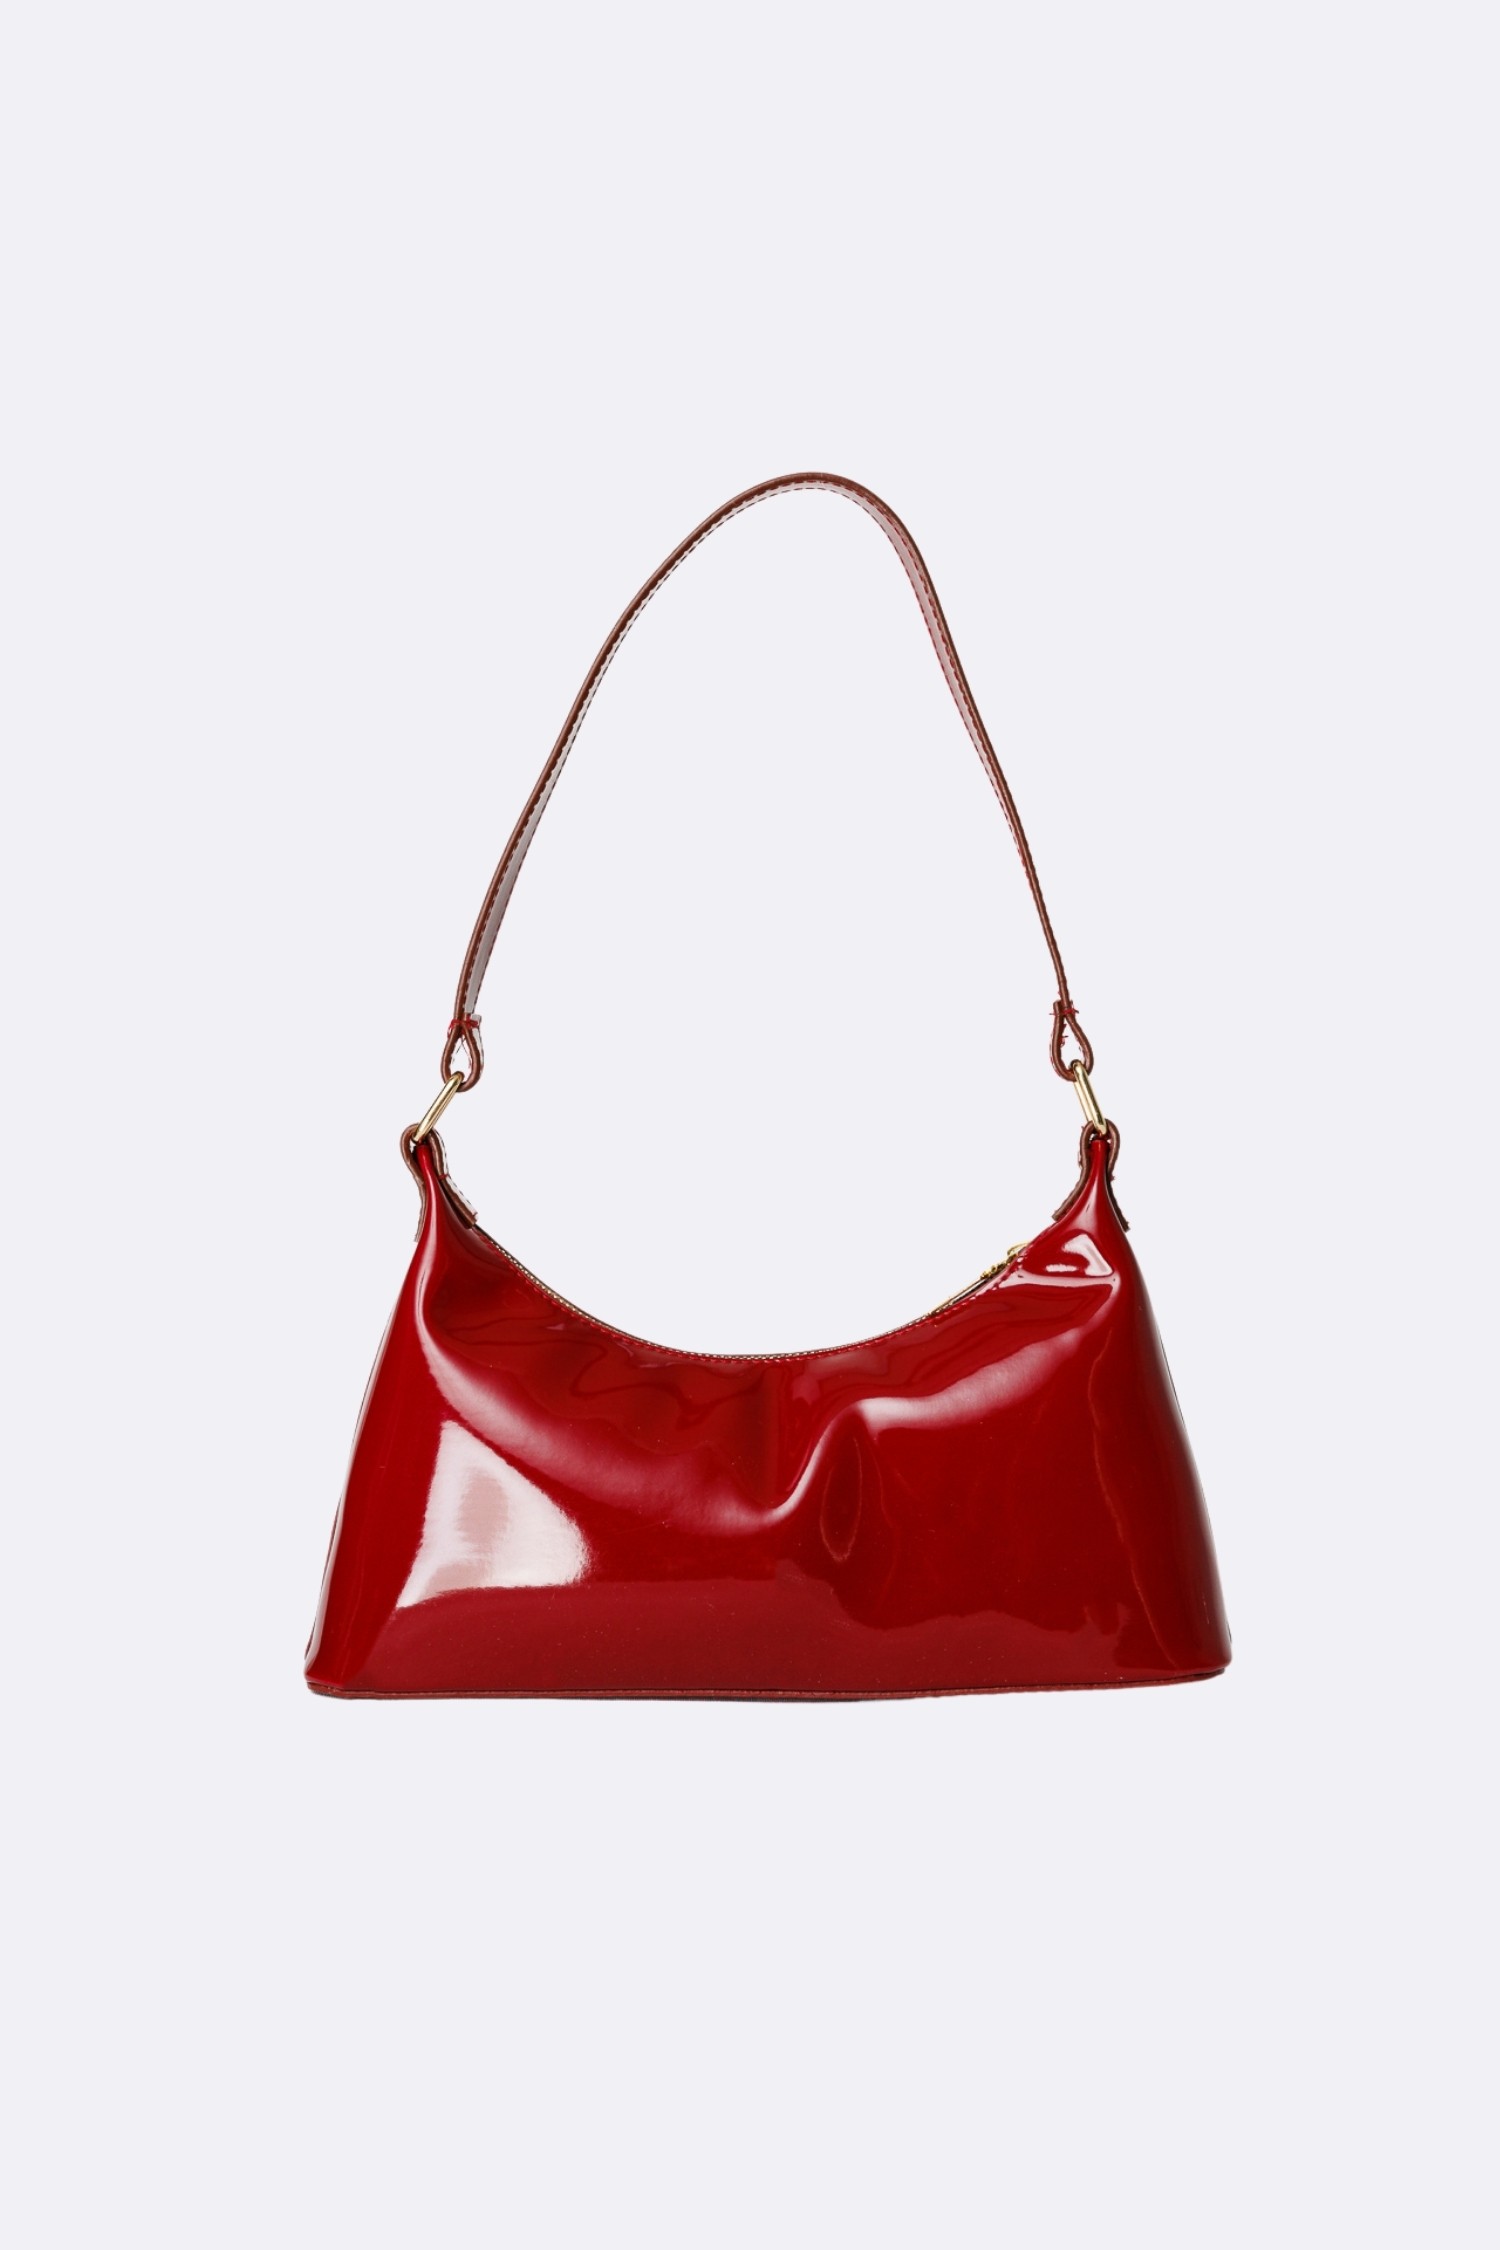 Garden Patent Leather Bag - Burgundy